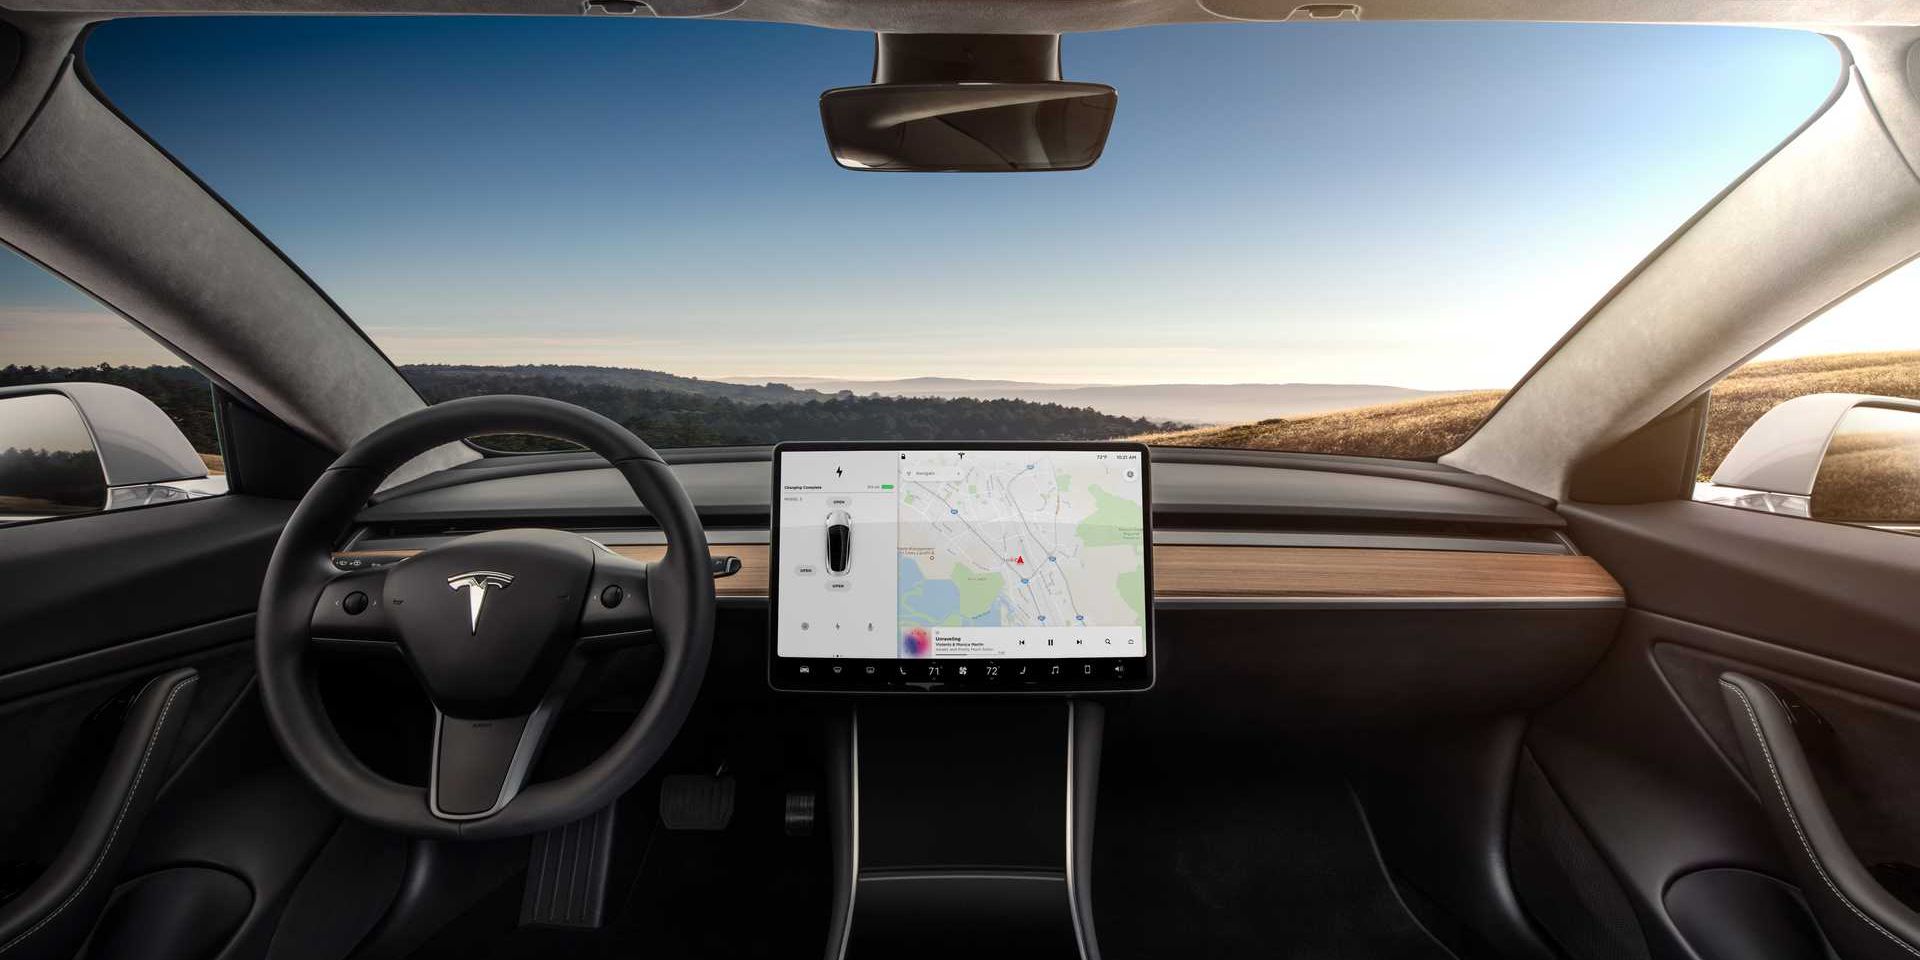 Tesla Model 3 interior dashboard with display